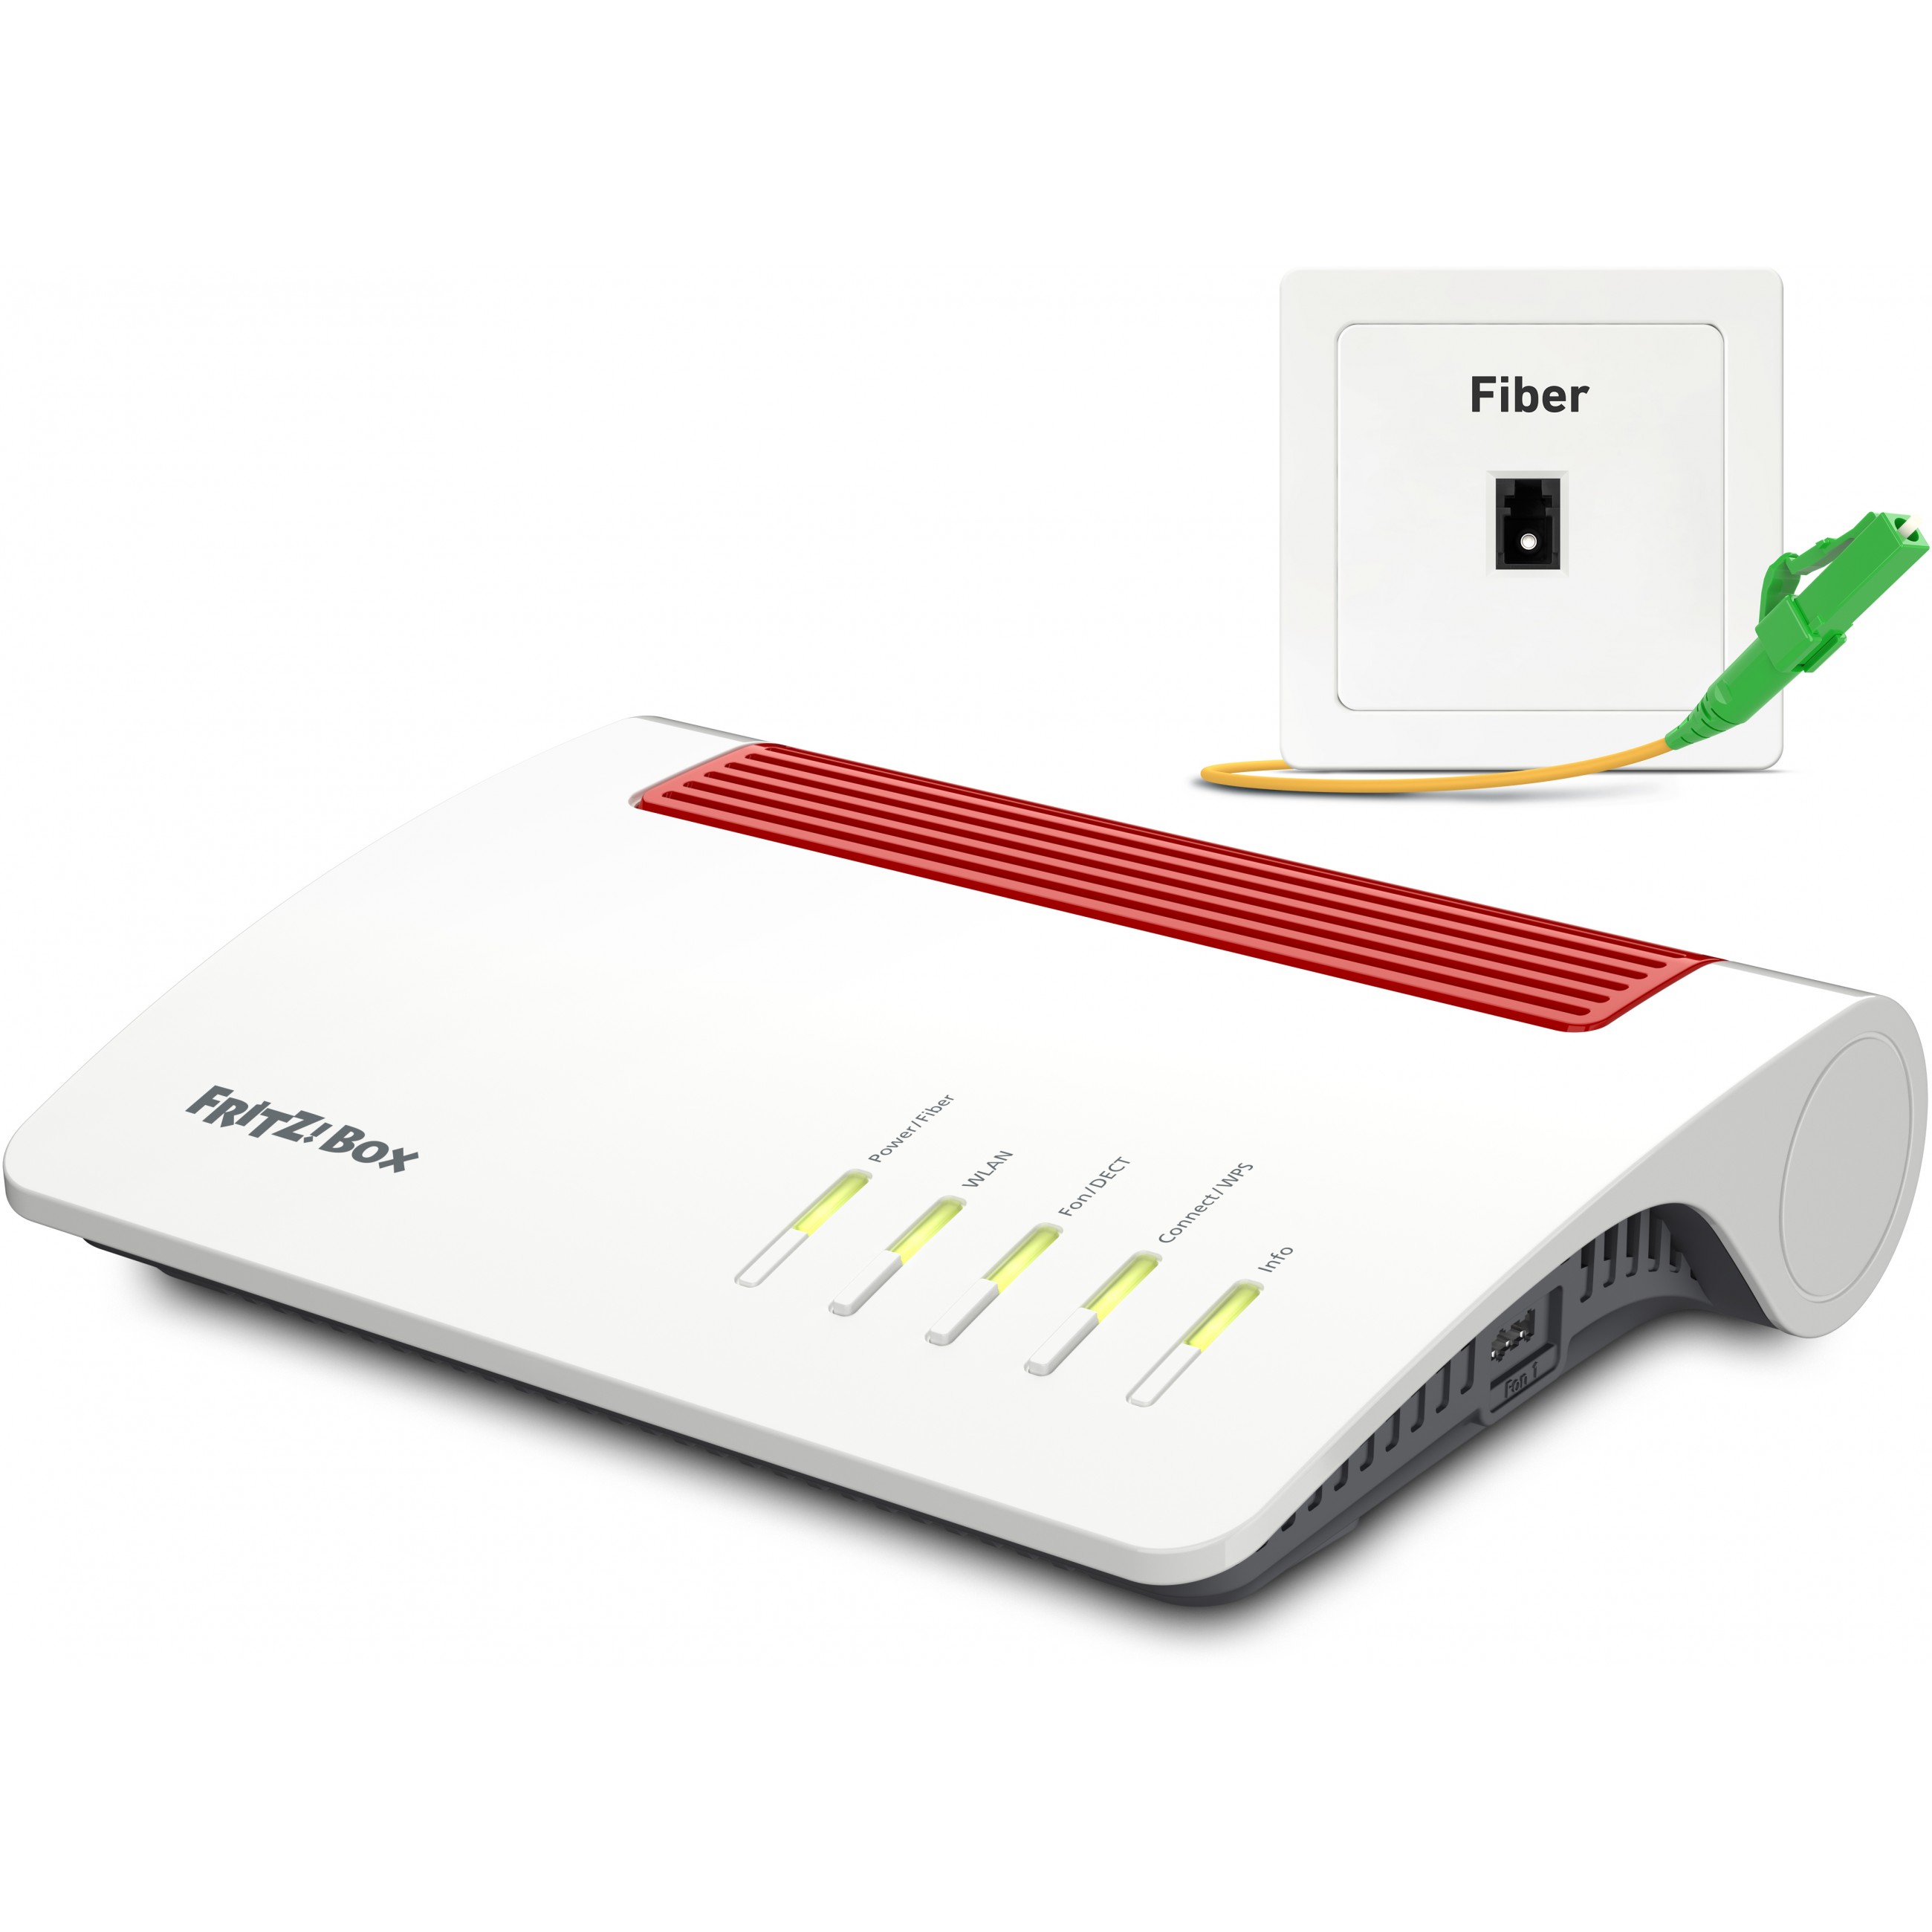 FRITZ!Box 5590 Fiber wireless router - 20002981